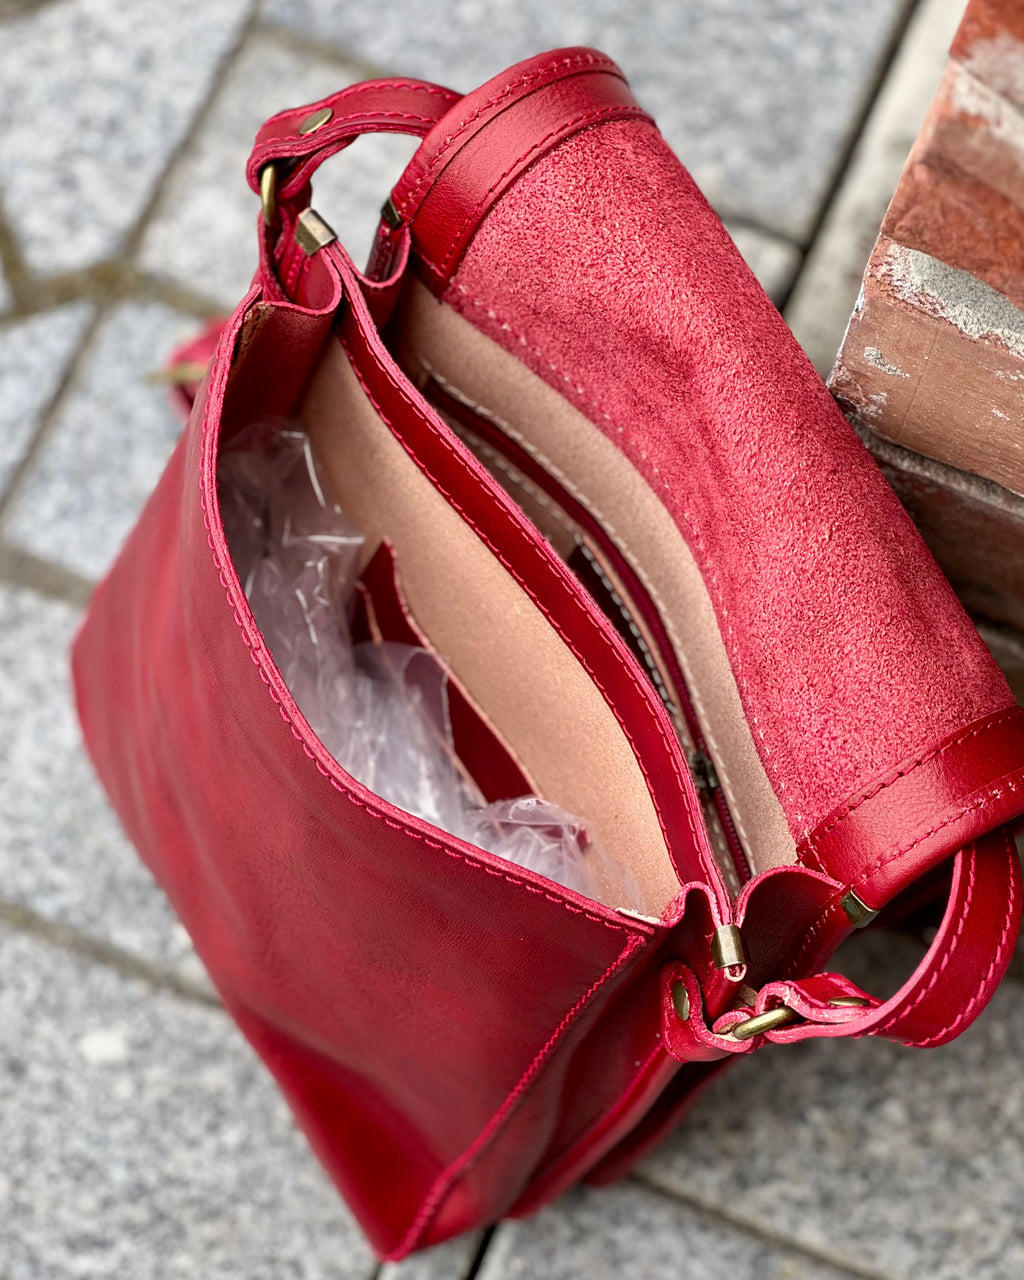 Interior of genuine leather satchel by Emporia Italia in dark red leather